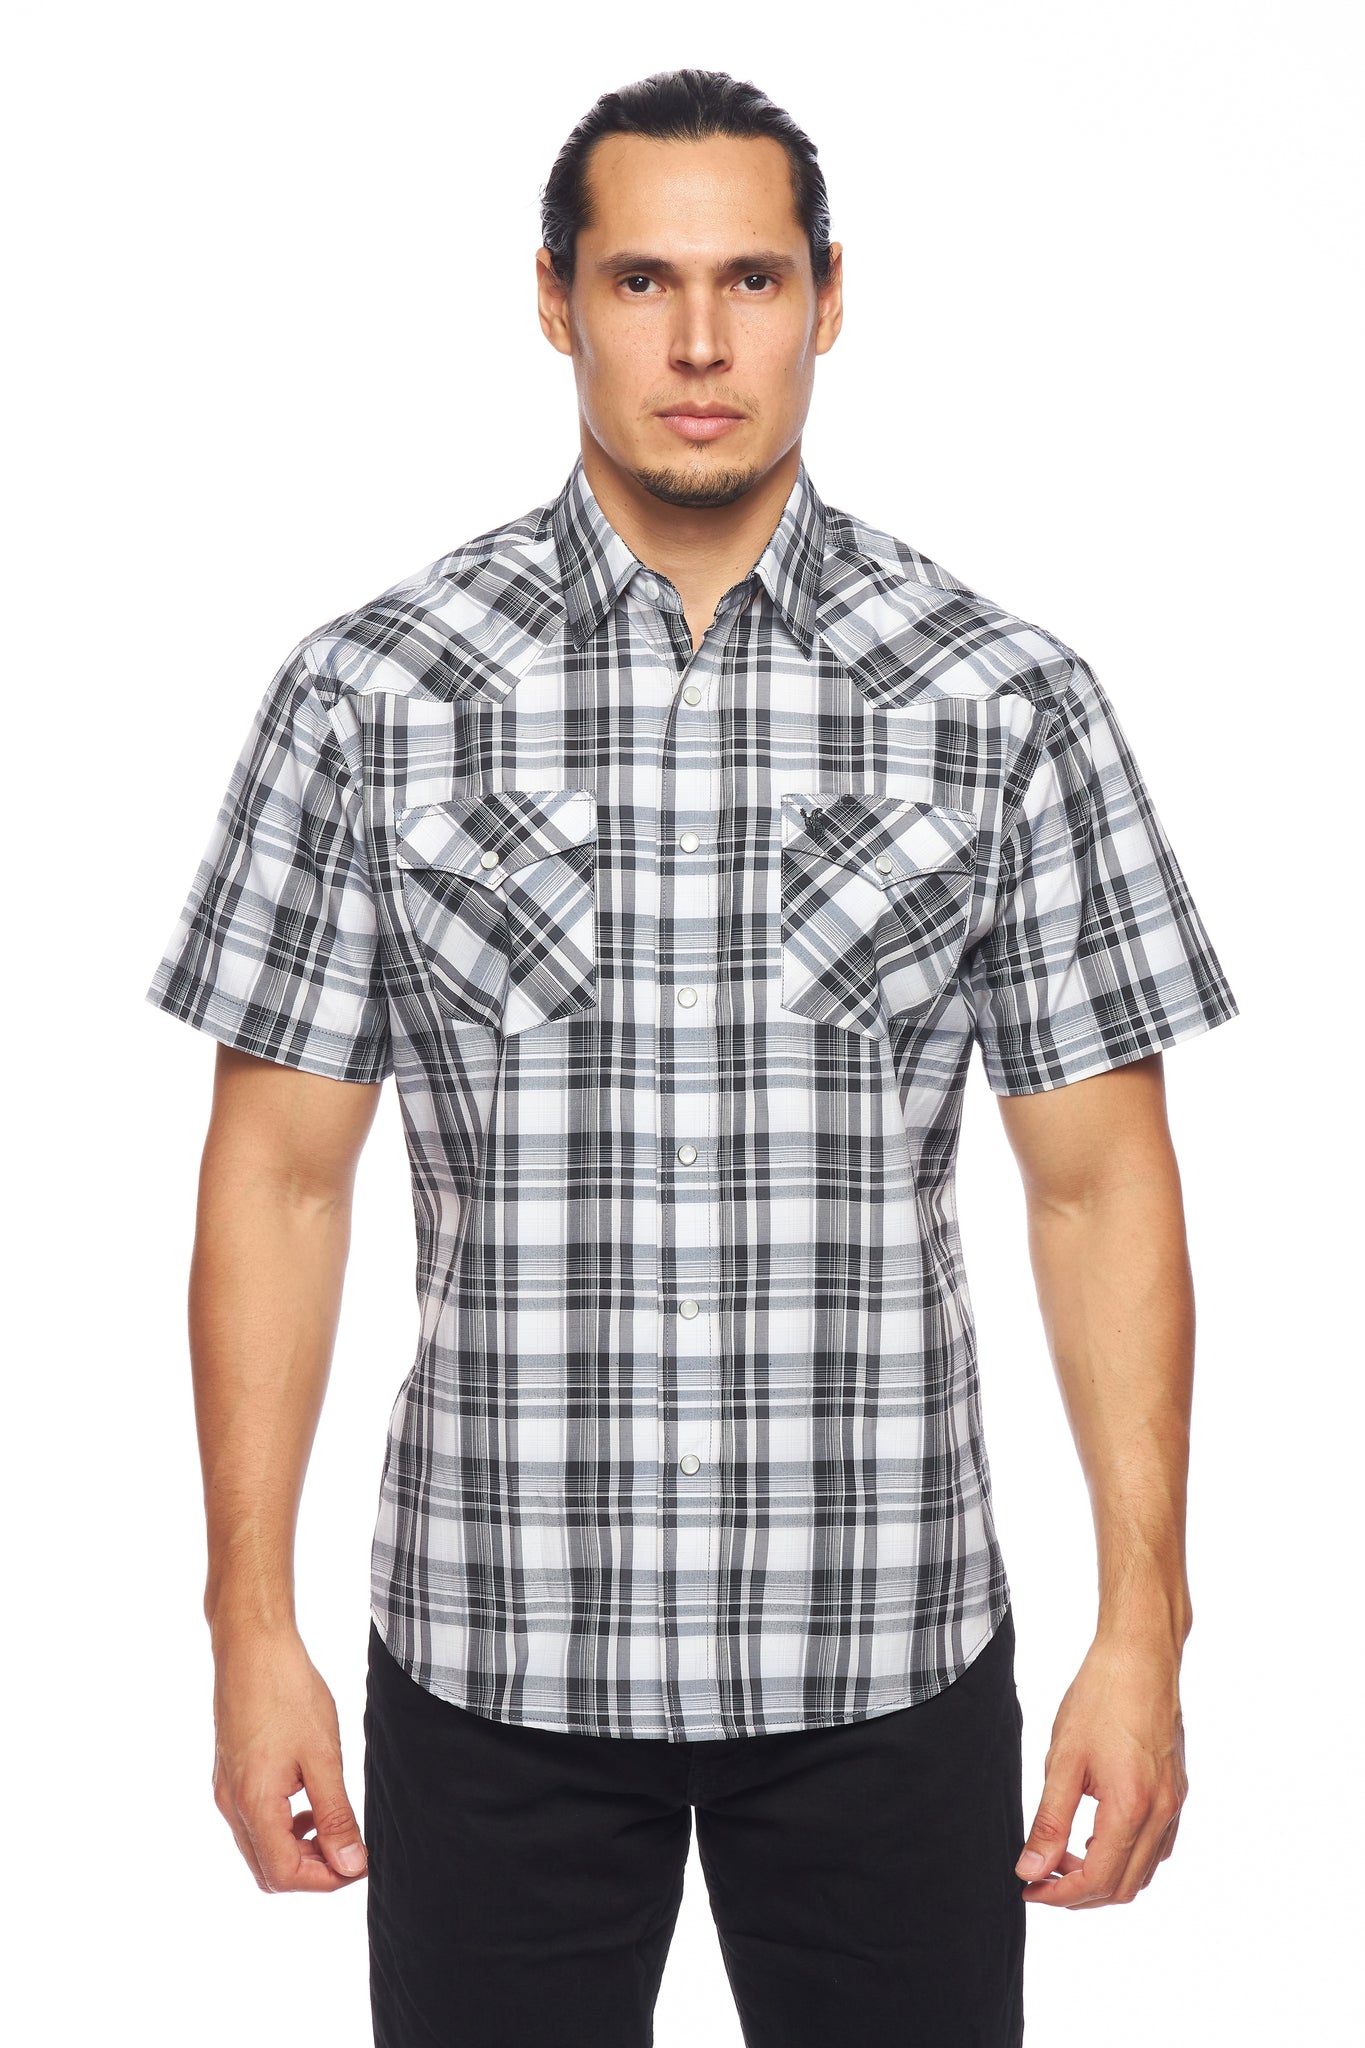 Camisas a cuadros occidentales de manga corta para hombre con botones a presión